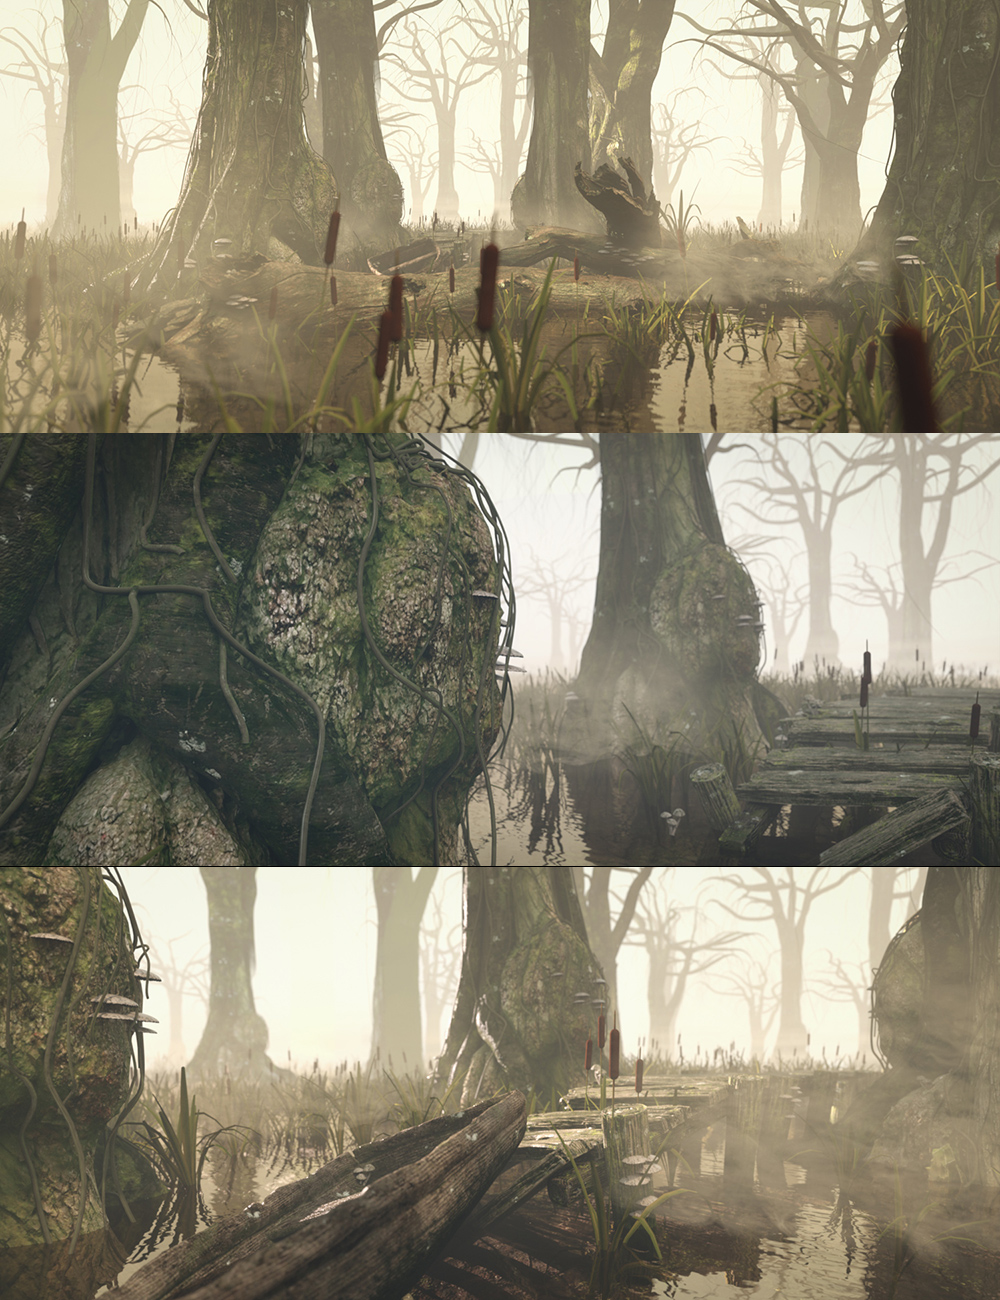 The Misty Swamp by: Dreamlight2 create HB, 3D Models by Daz 3D